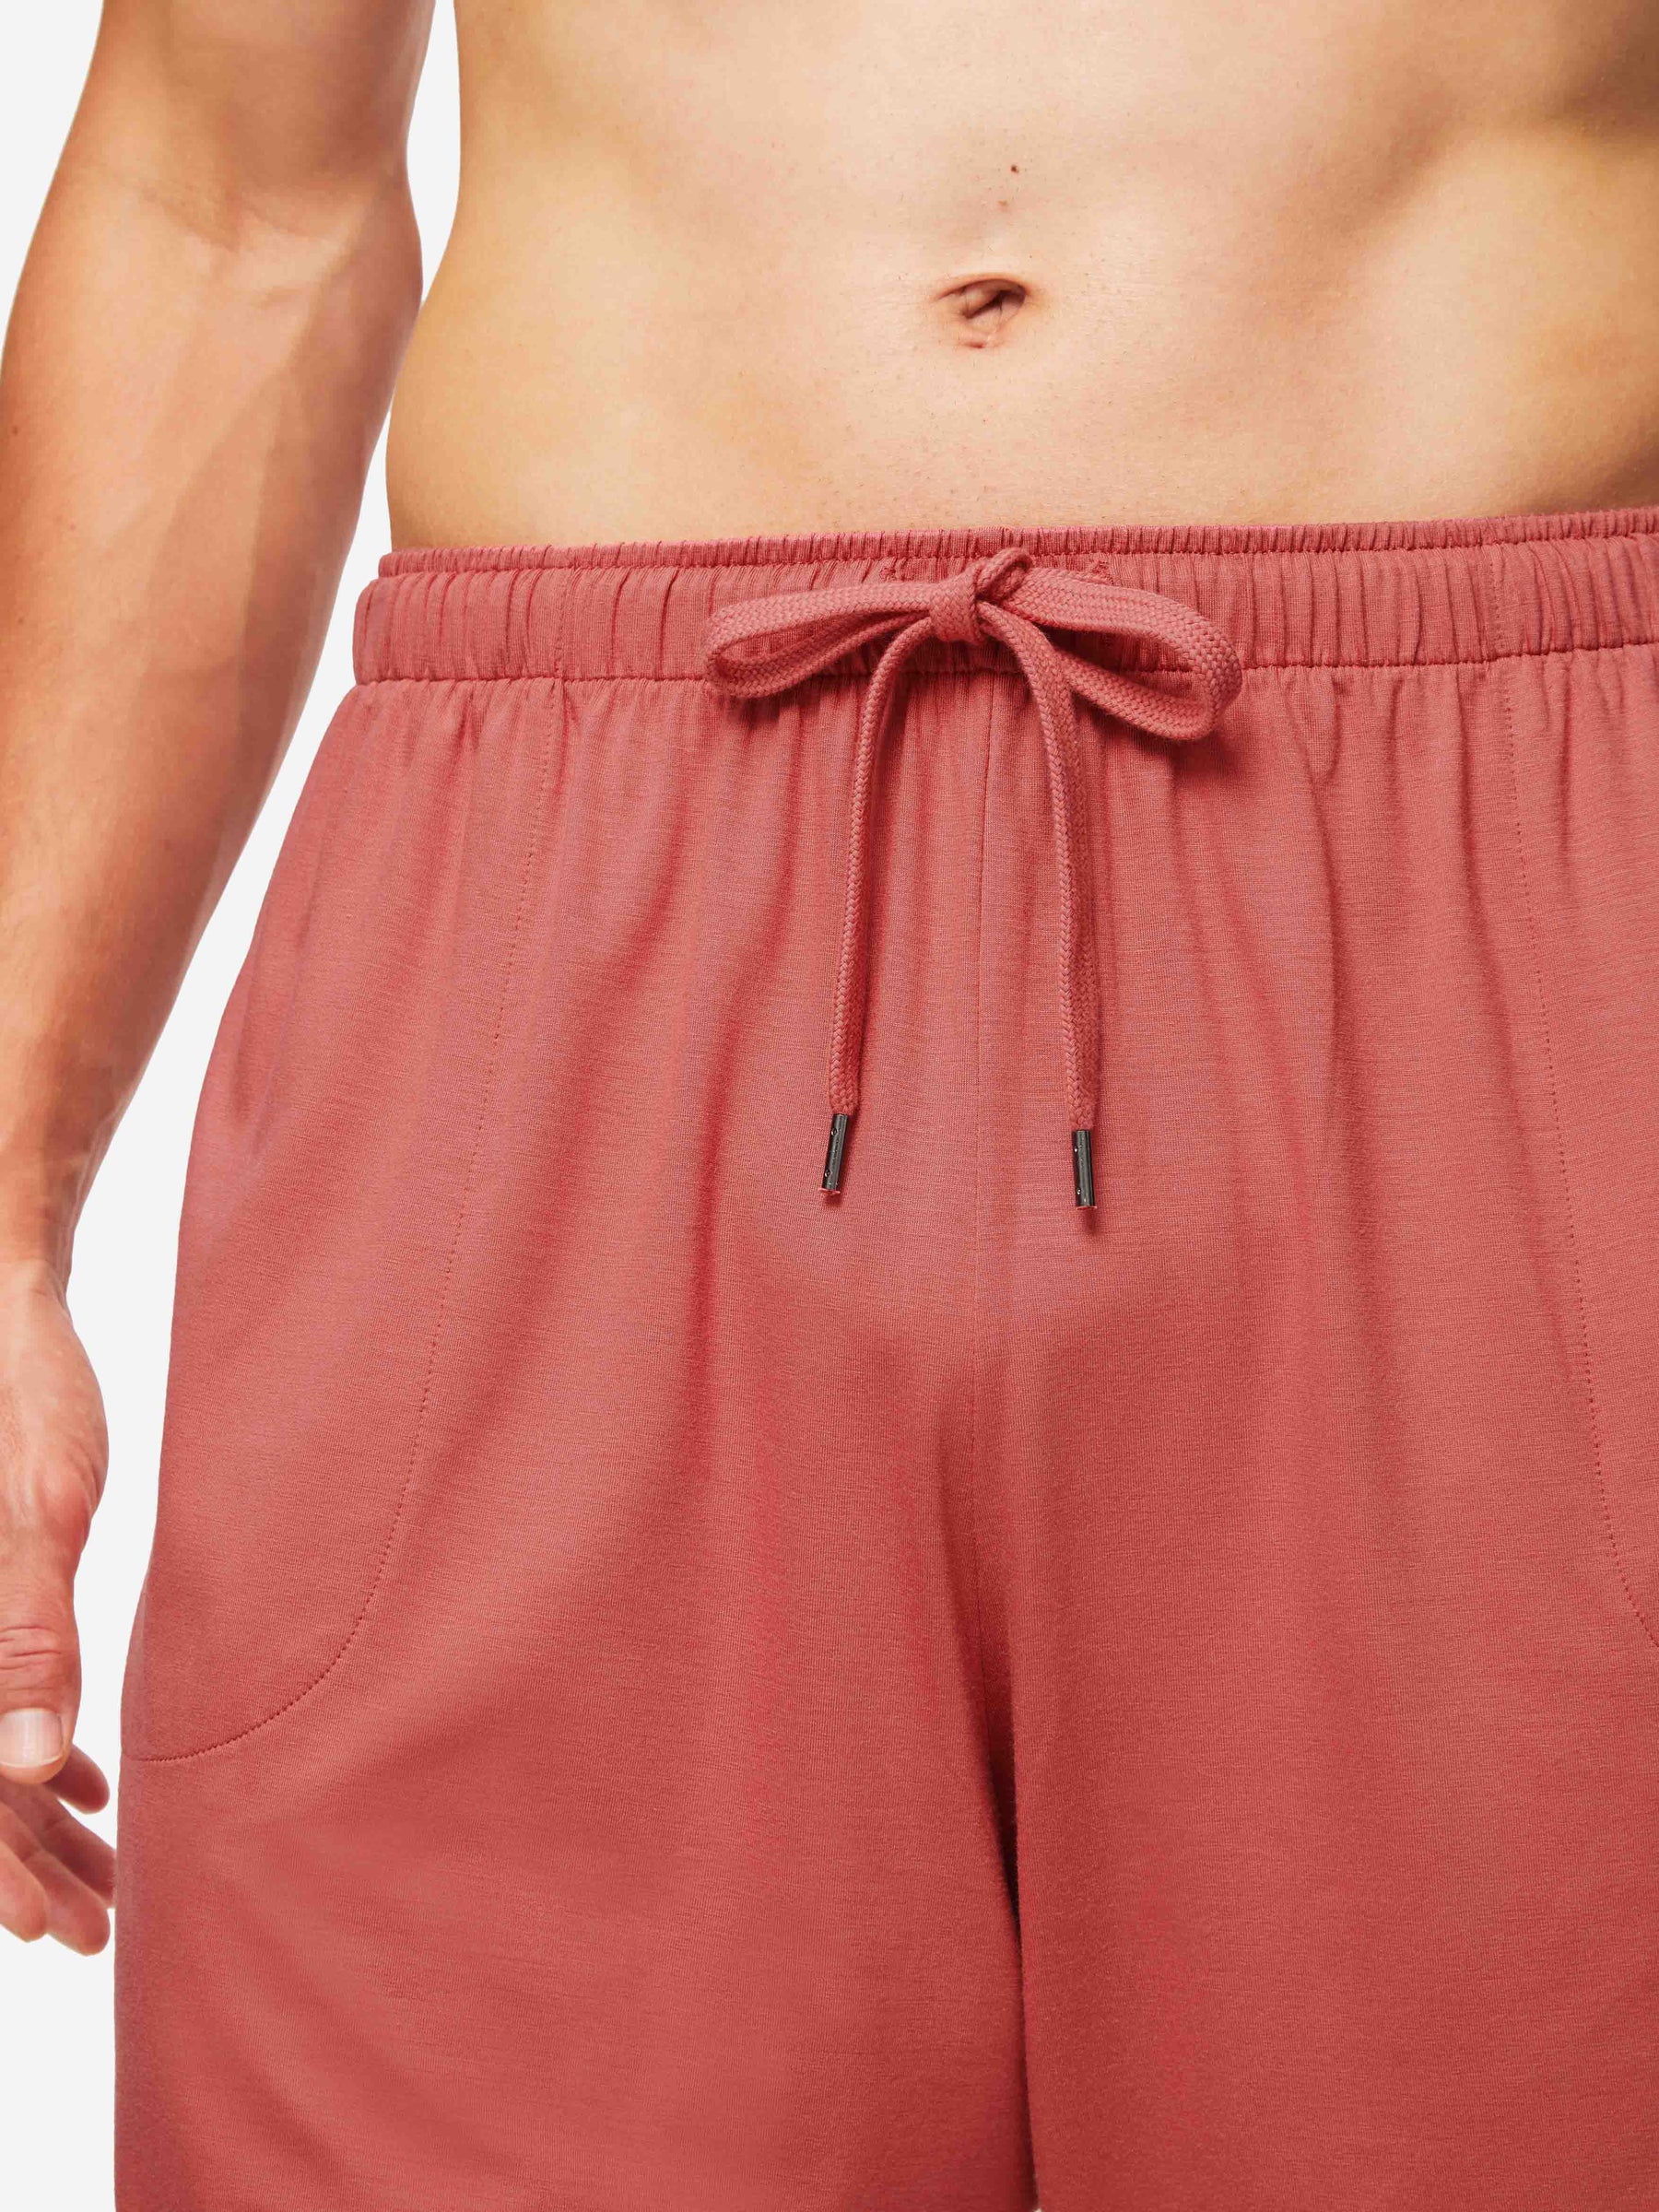 Men's Lounge Shorts Basel Micro Modal Stretch Soft  Cedar